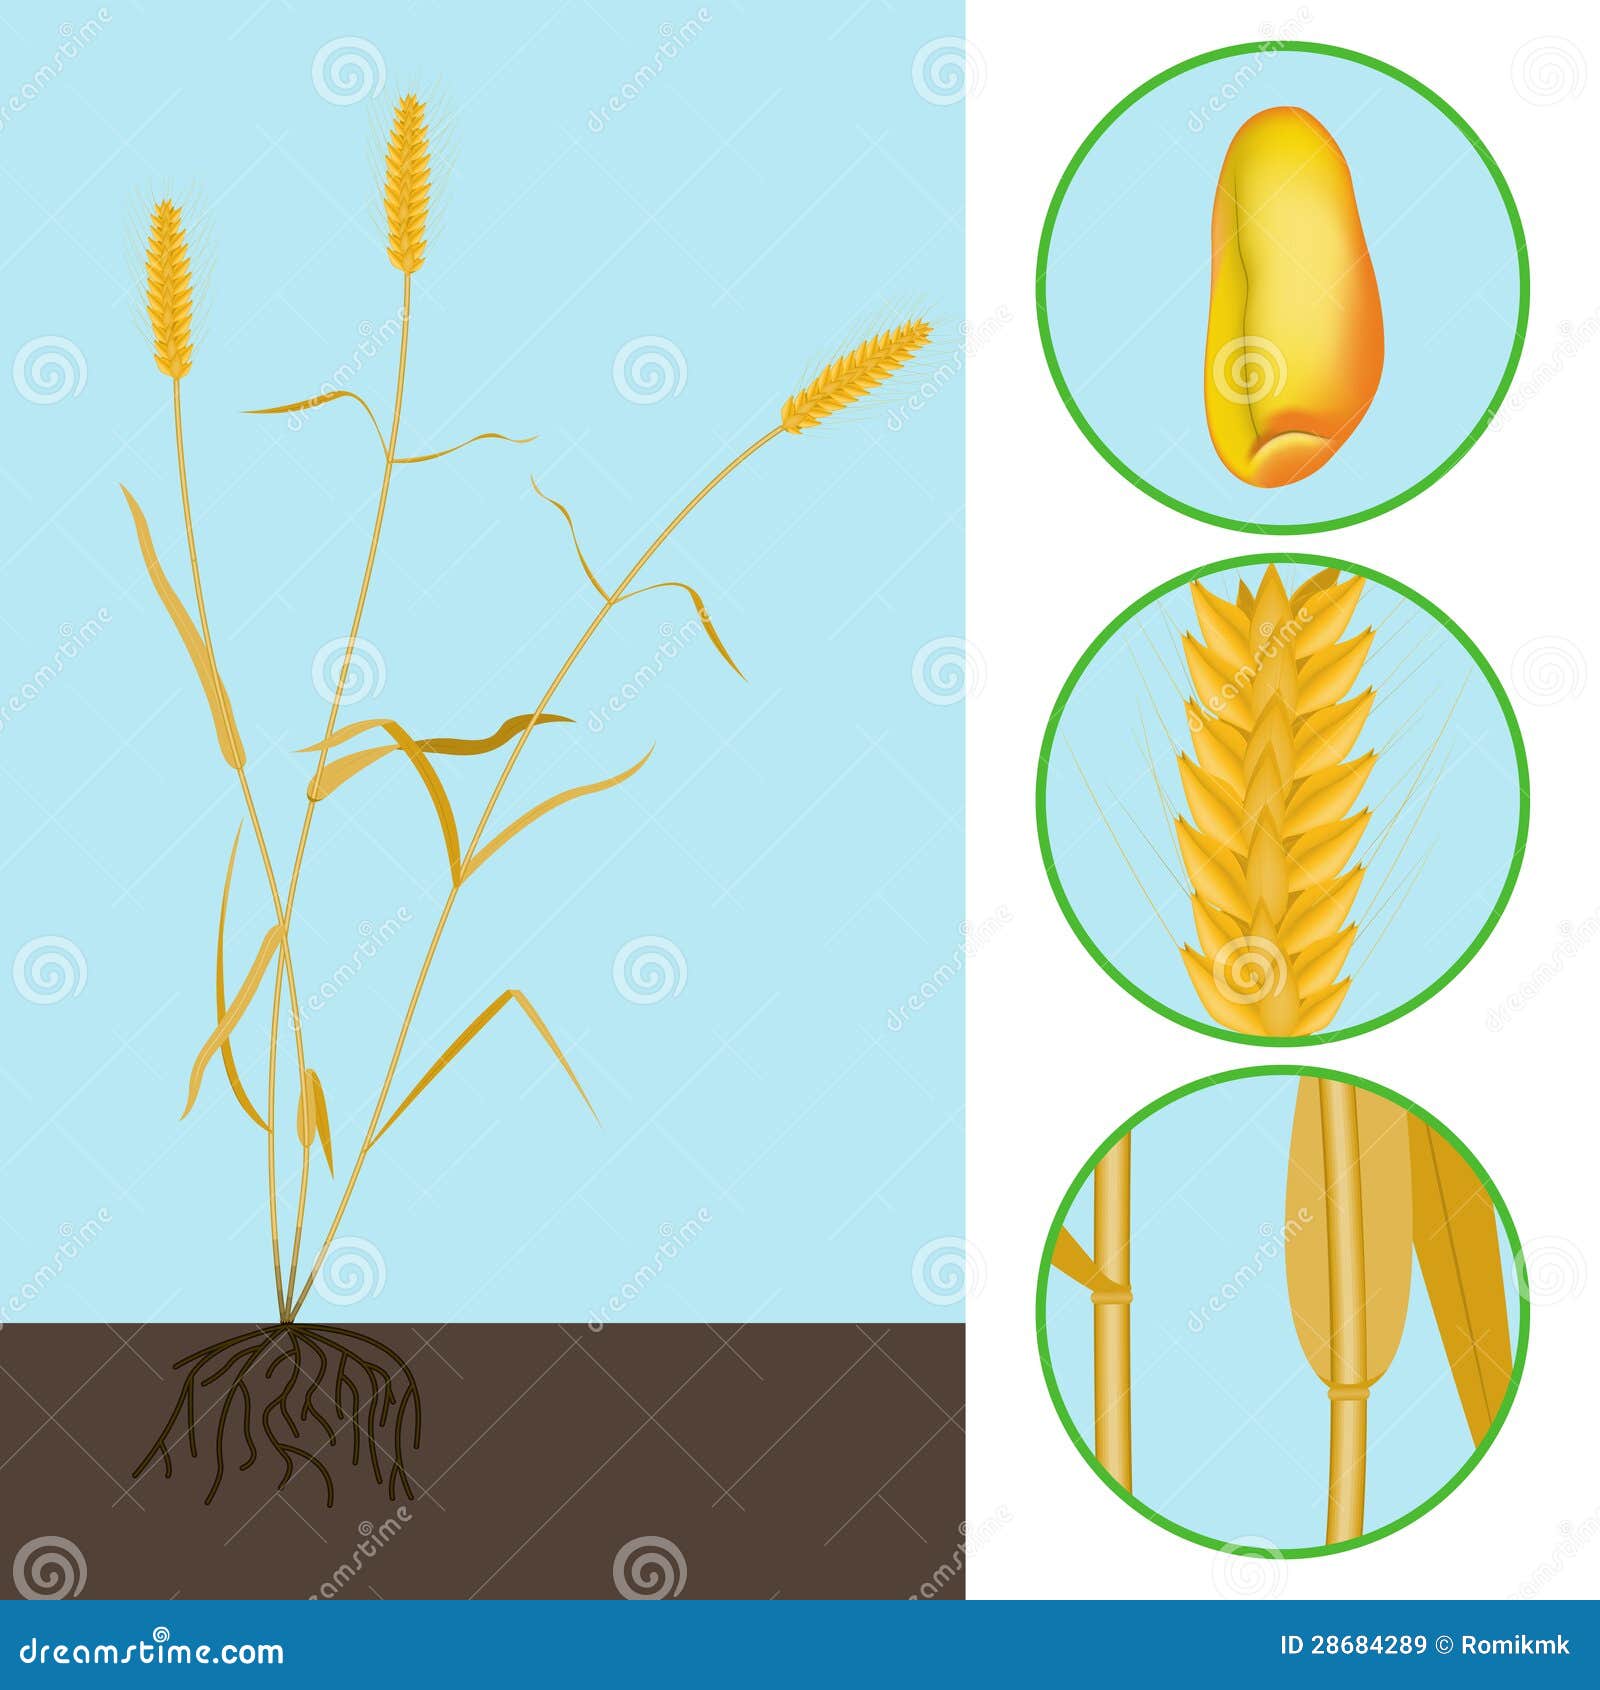 Wheat as a plant stock illustration. Illustration of botany - 28684289